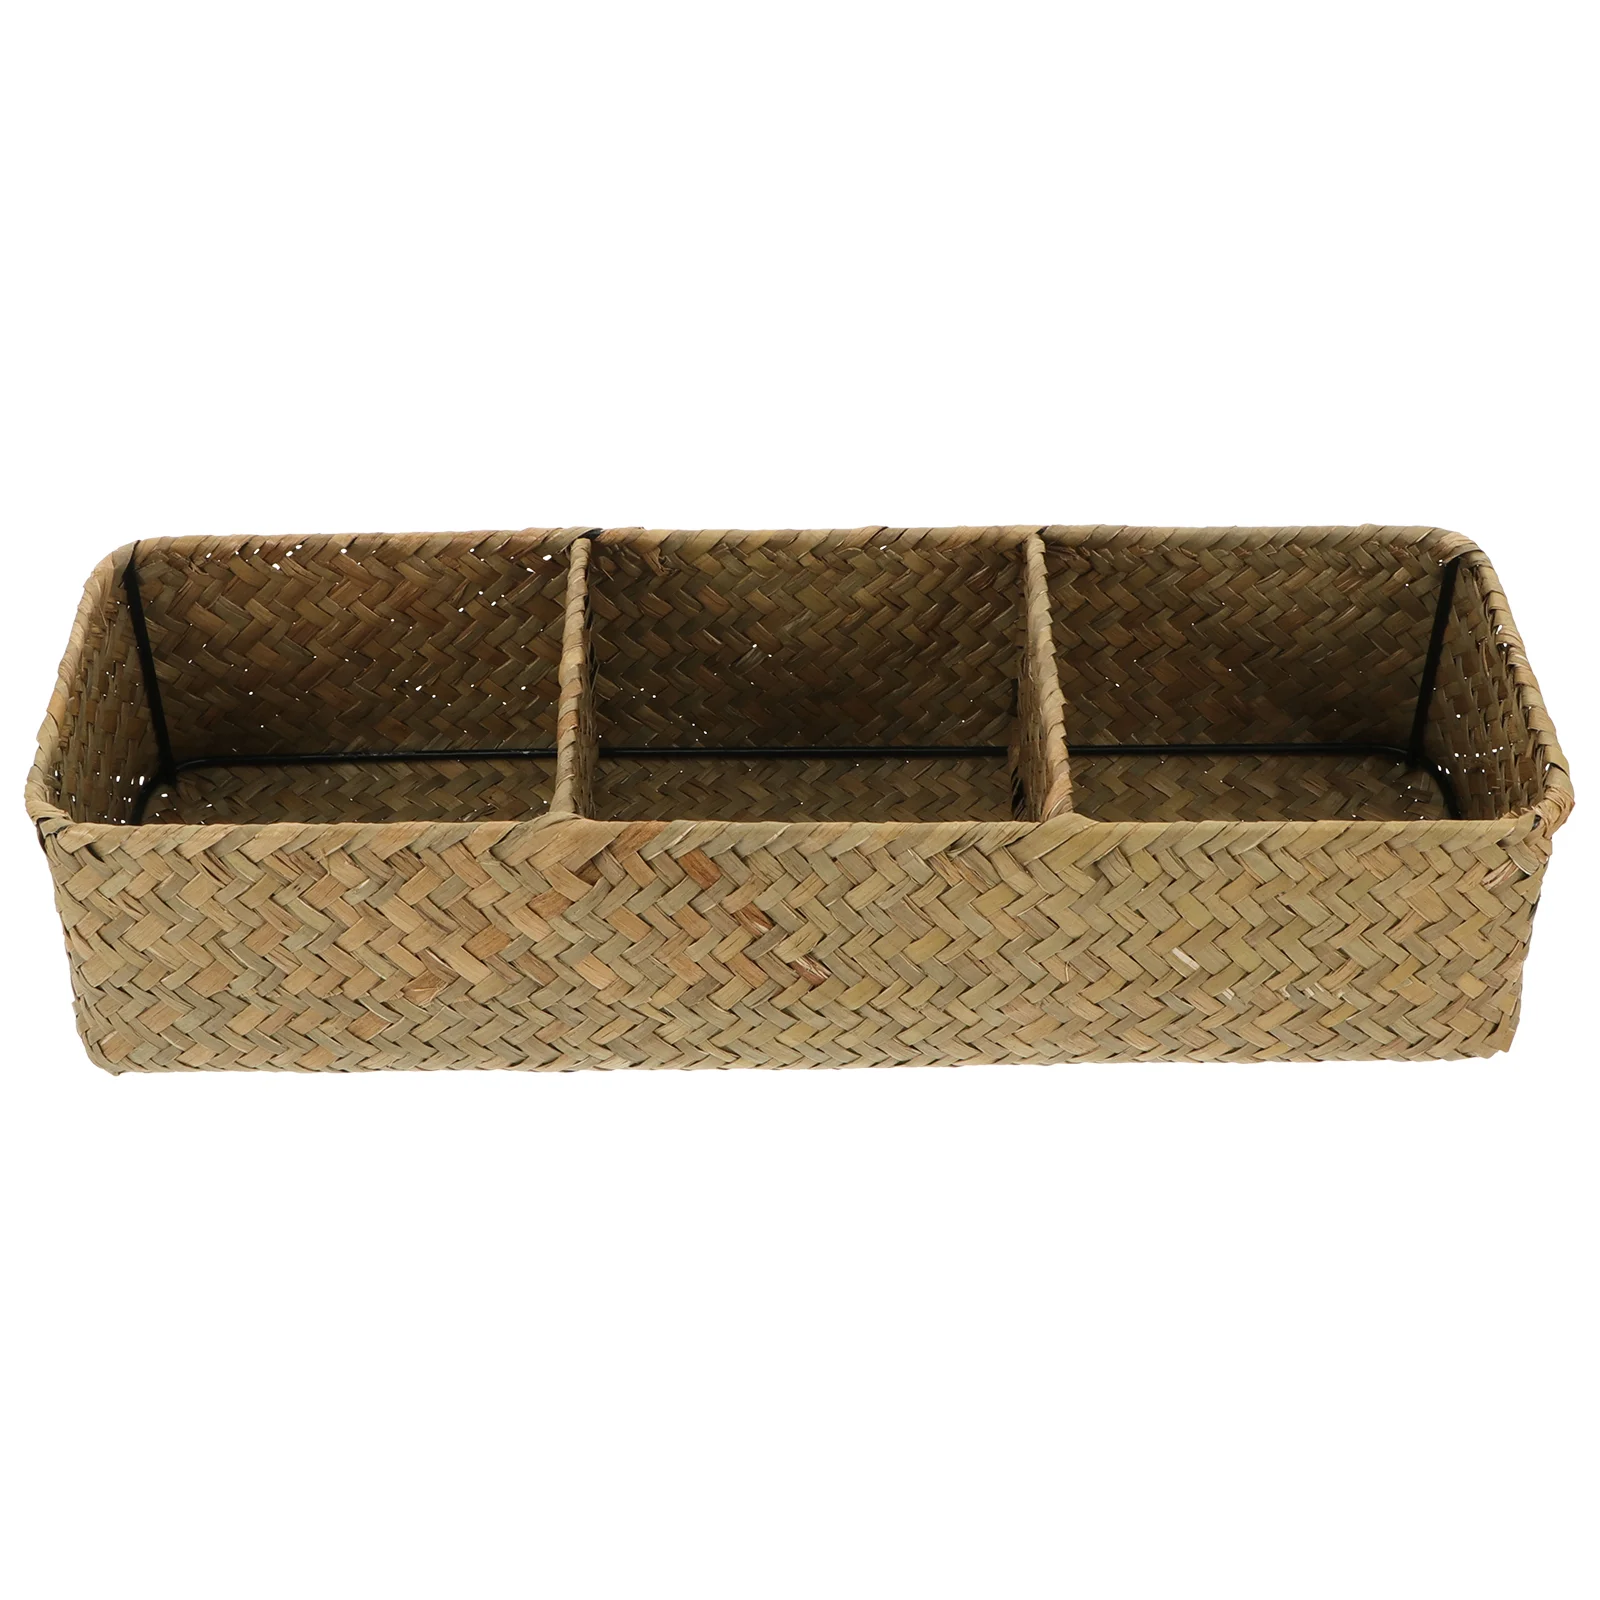 

Basket Storage Baskets Woven Wicker Organizer Seagrass Rattan Box Toilet Bins Tray Bathroom Hand Bin Shelf Paper Decorative